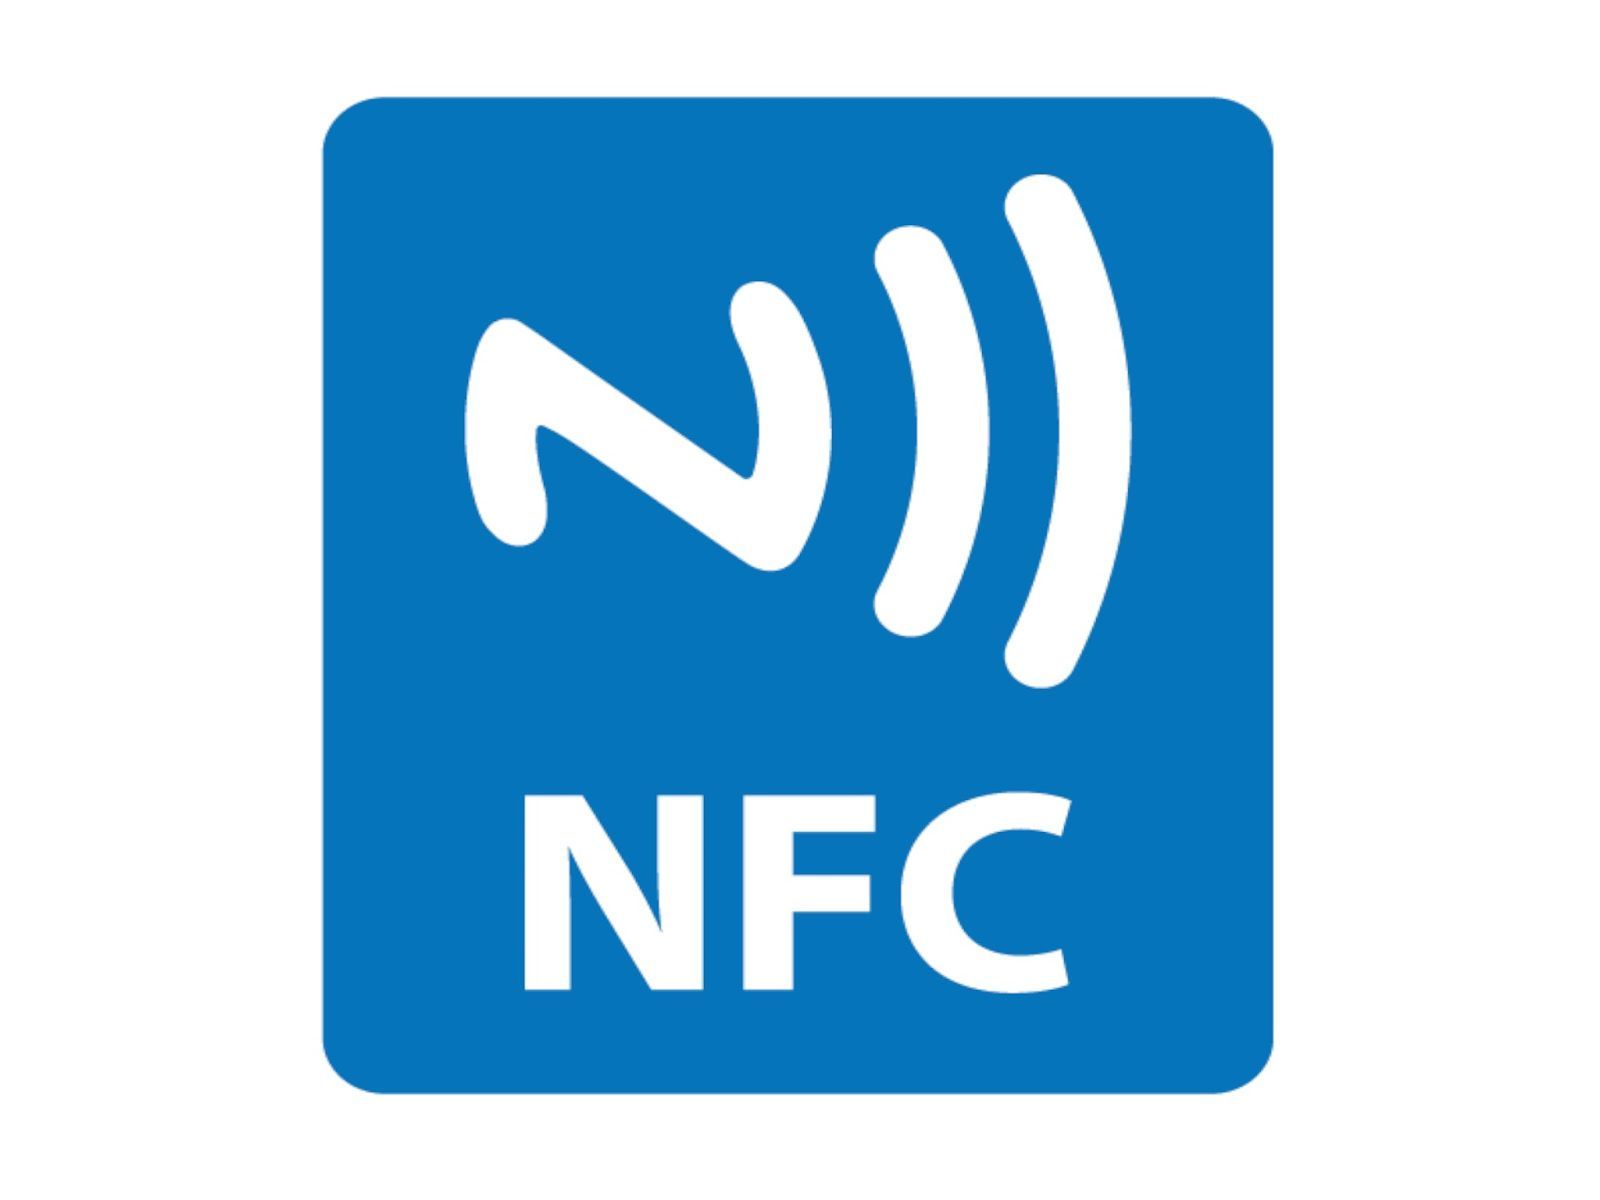 Метка для оплаты. Иконка NFC. NFC метка логотип. Near field communication (NFC). T.N.F..